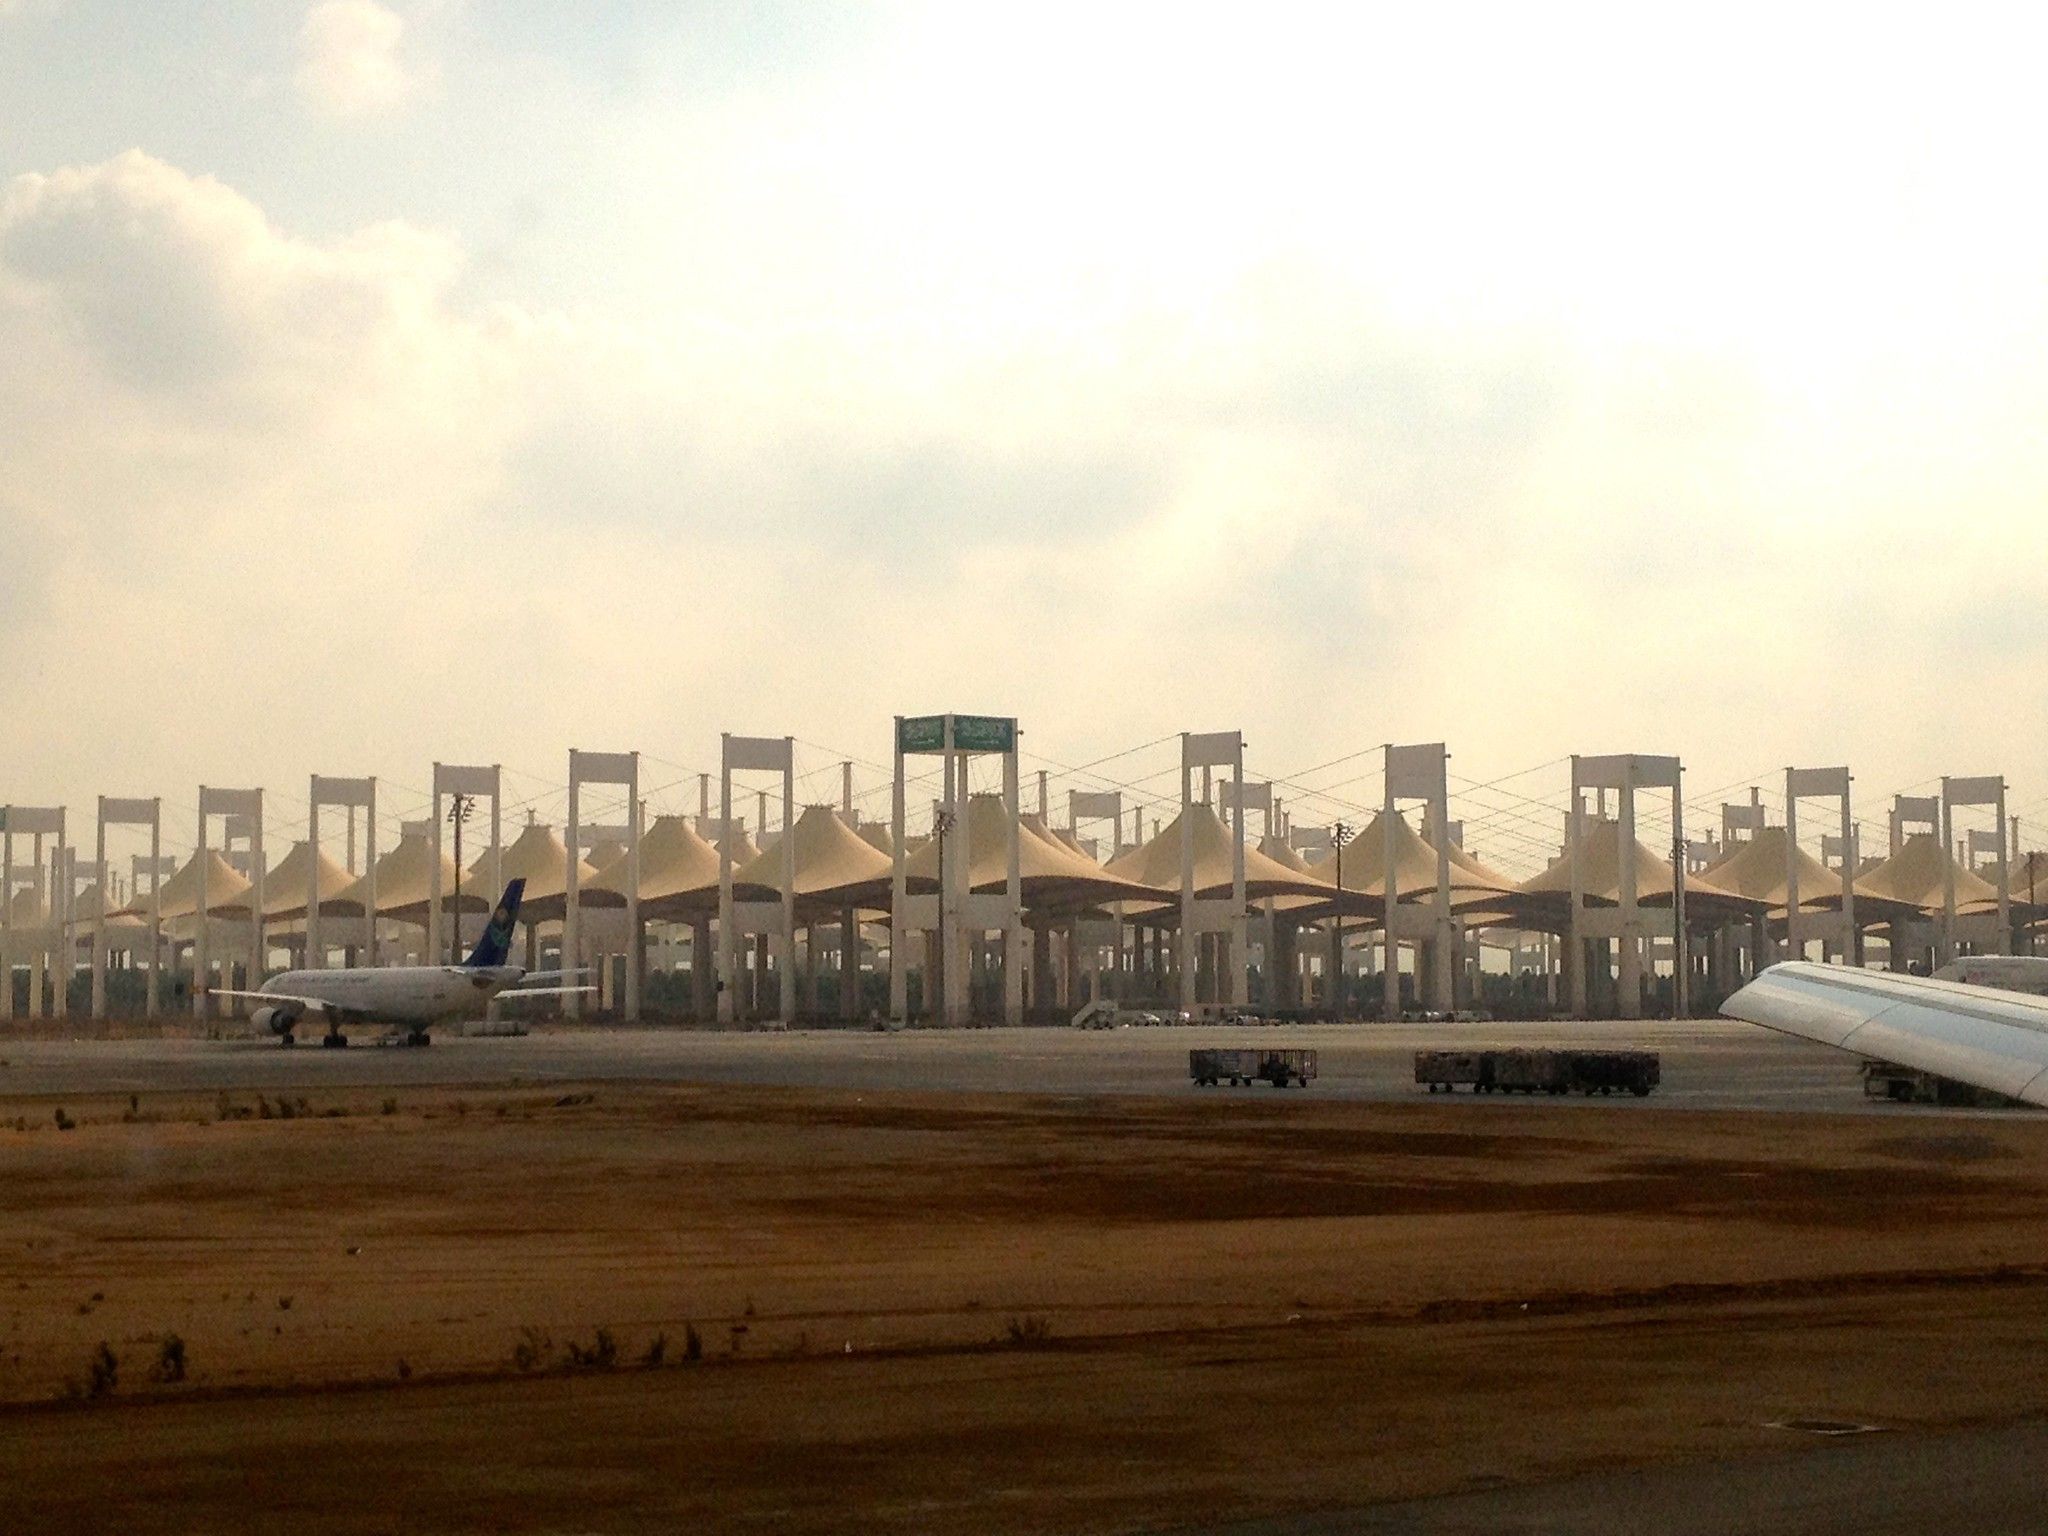 Jeddah's HTC Hajj and Umrah terminal